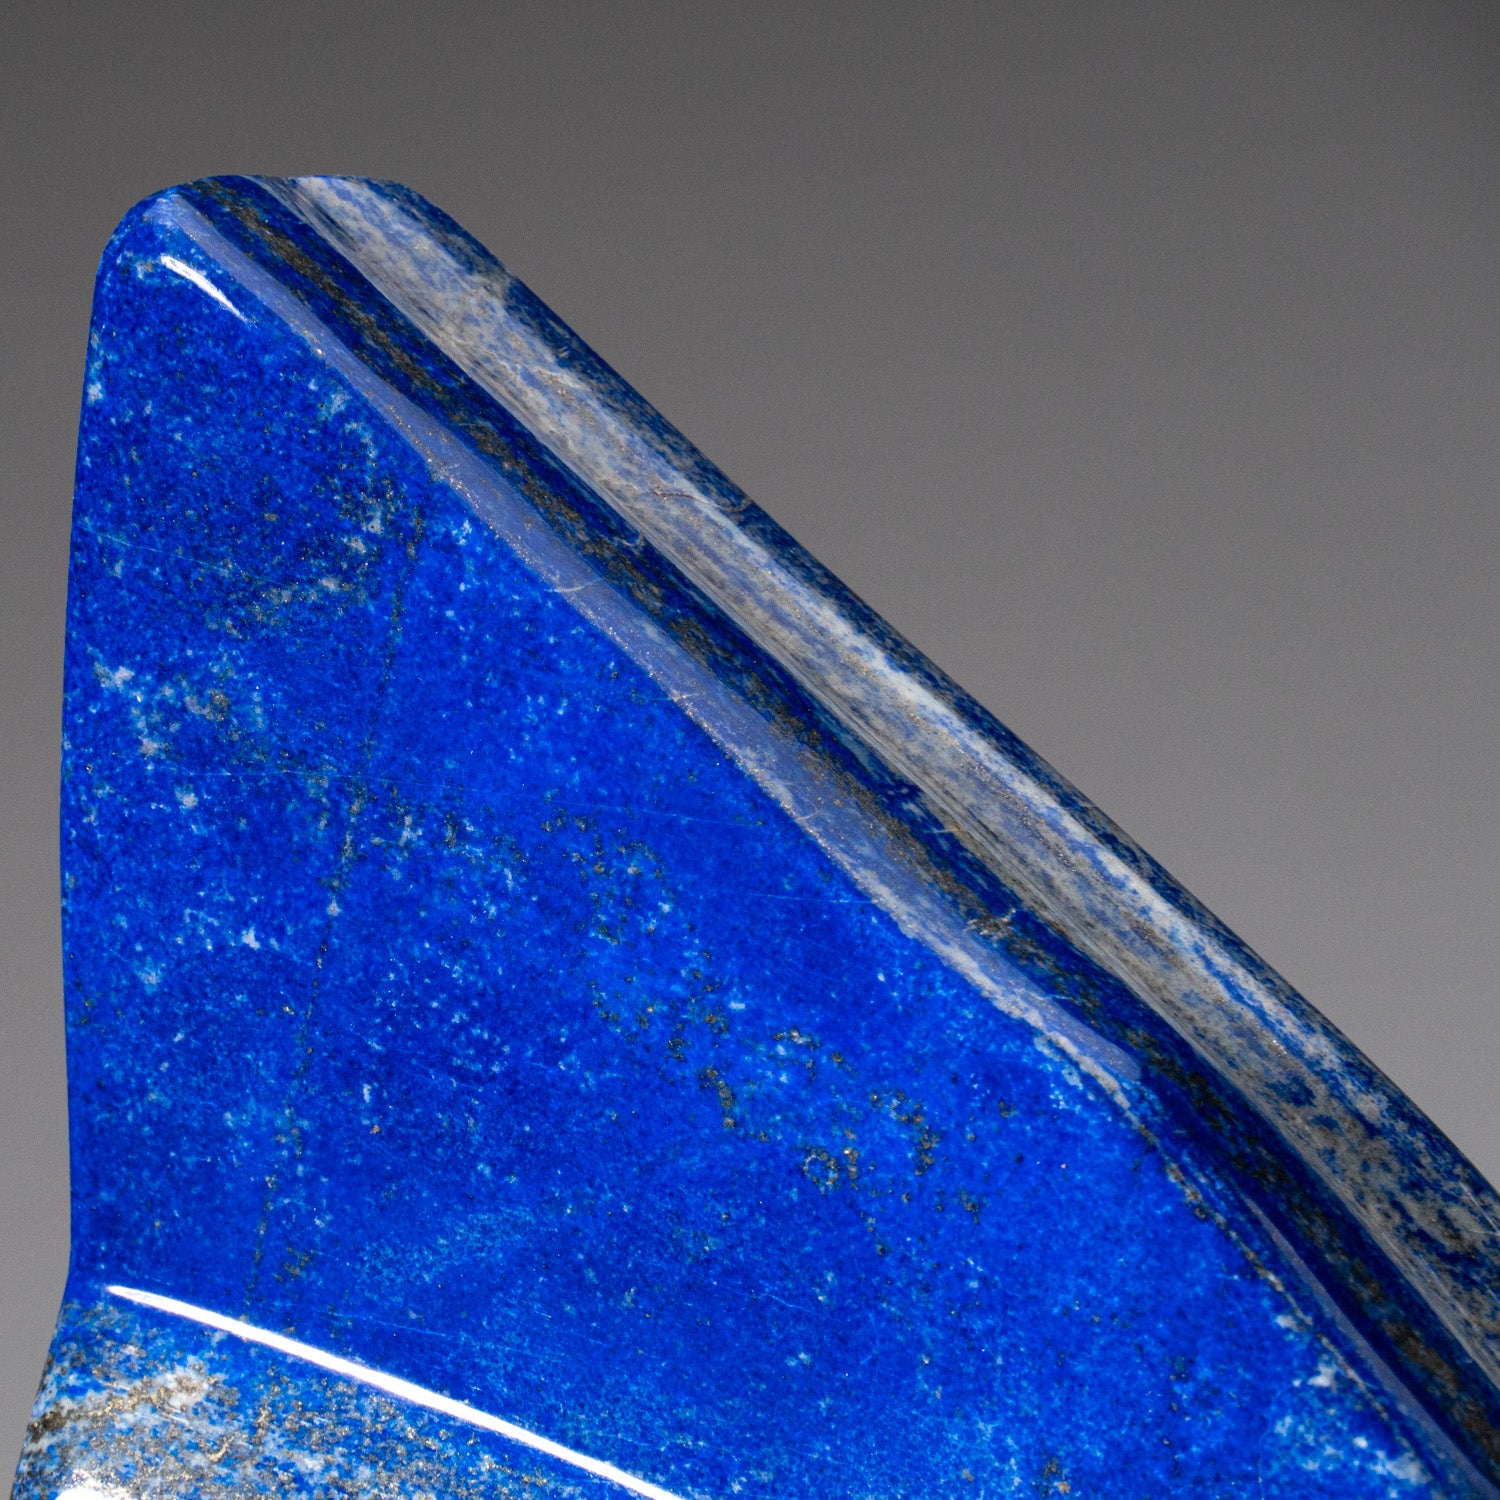 Polished Lapis Lazuli Freeform from Afghanistan (6.8 lbs)